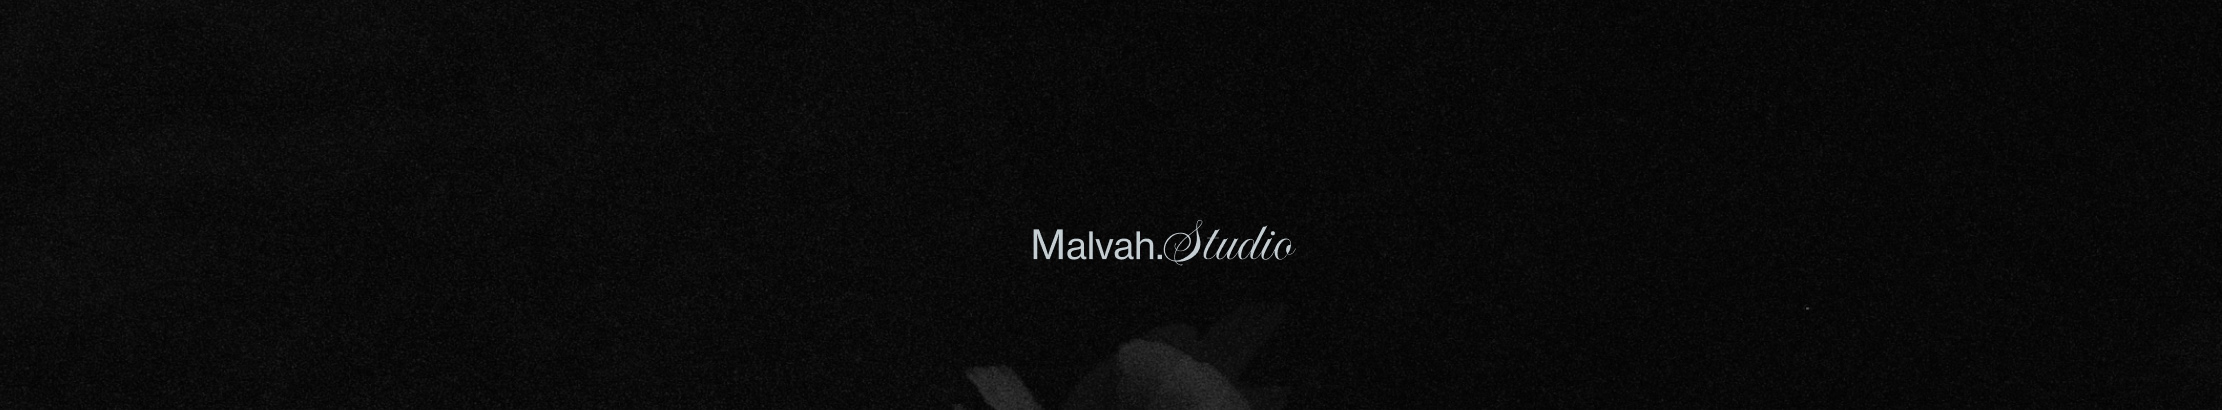 Malvah Studio's profile banner